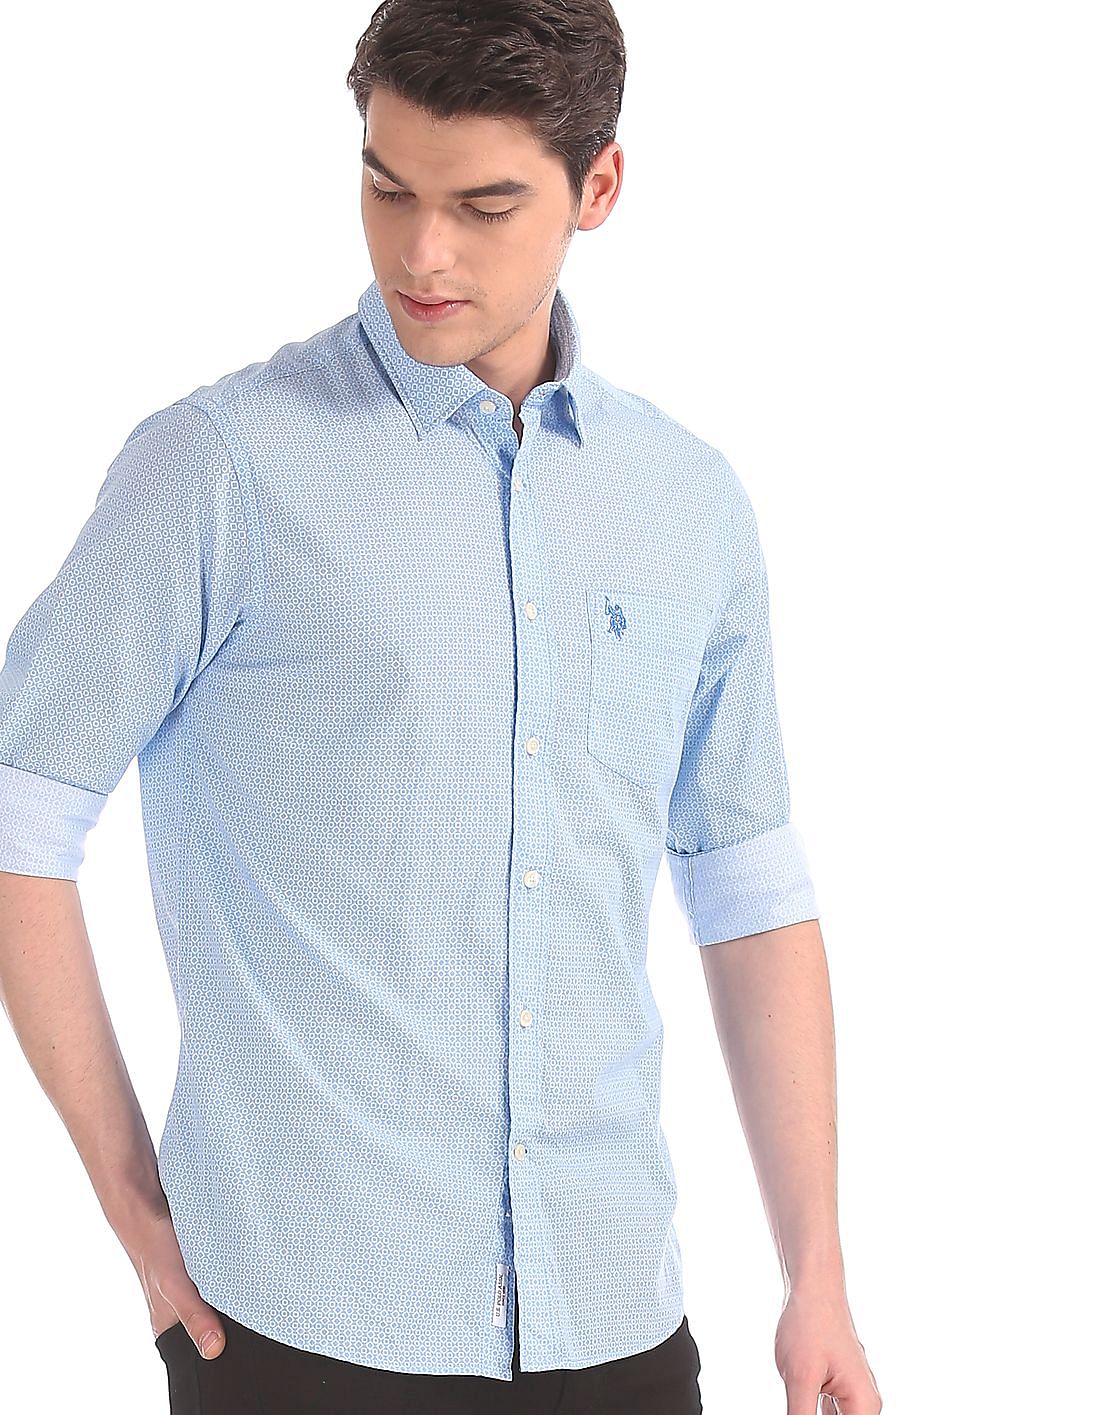 Buy Men Blue Regular Fit Cotton Shirt online at NNNOW.com